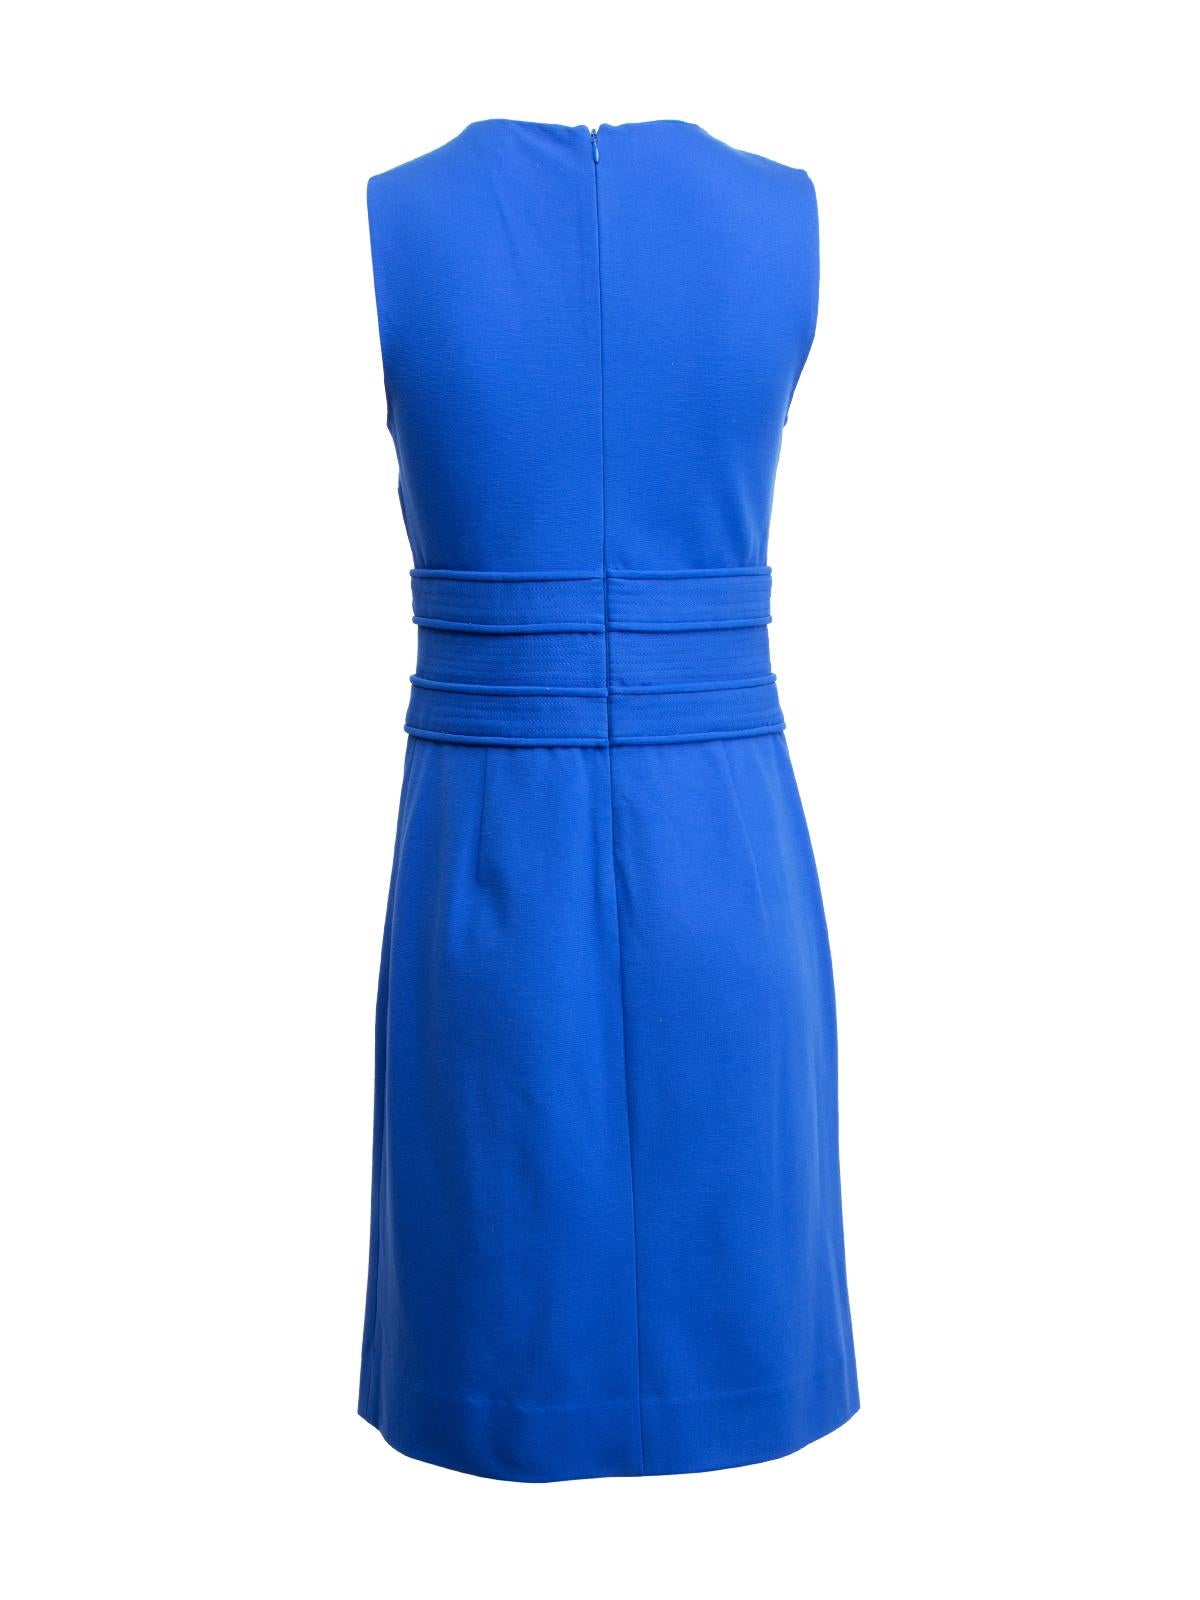 Blue Pre-Loved Diane Von Furstenberg Women's Sleeveless Fit and Flare Dress